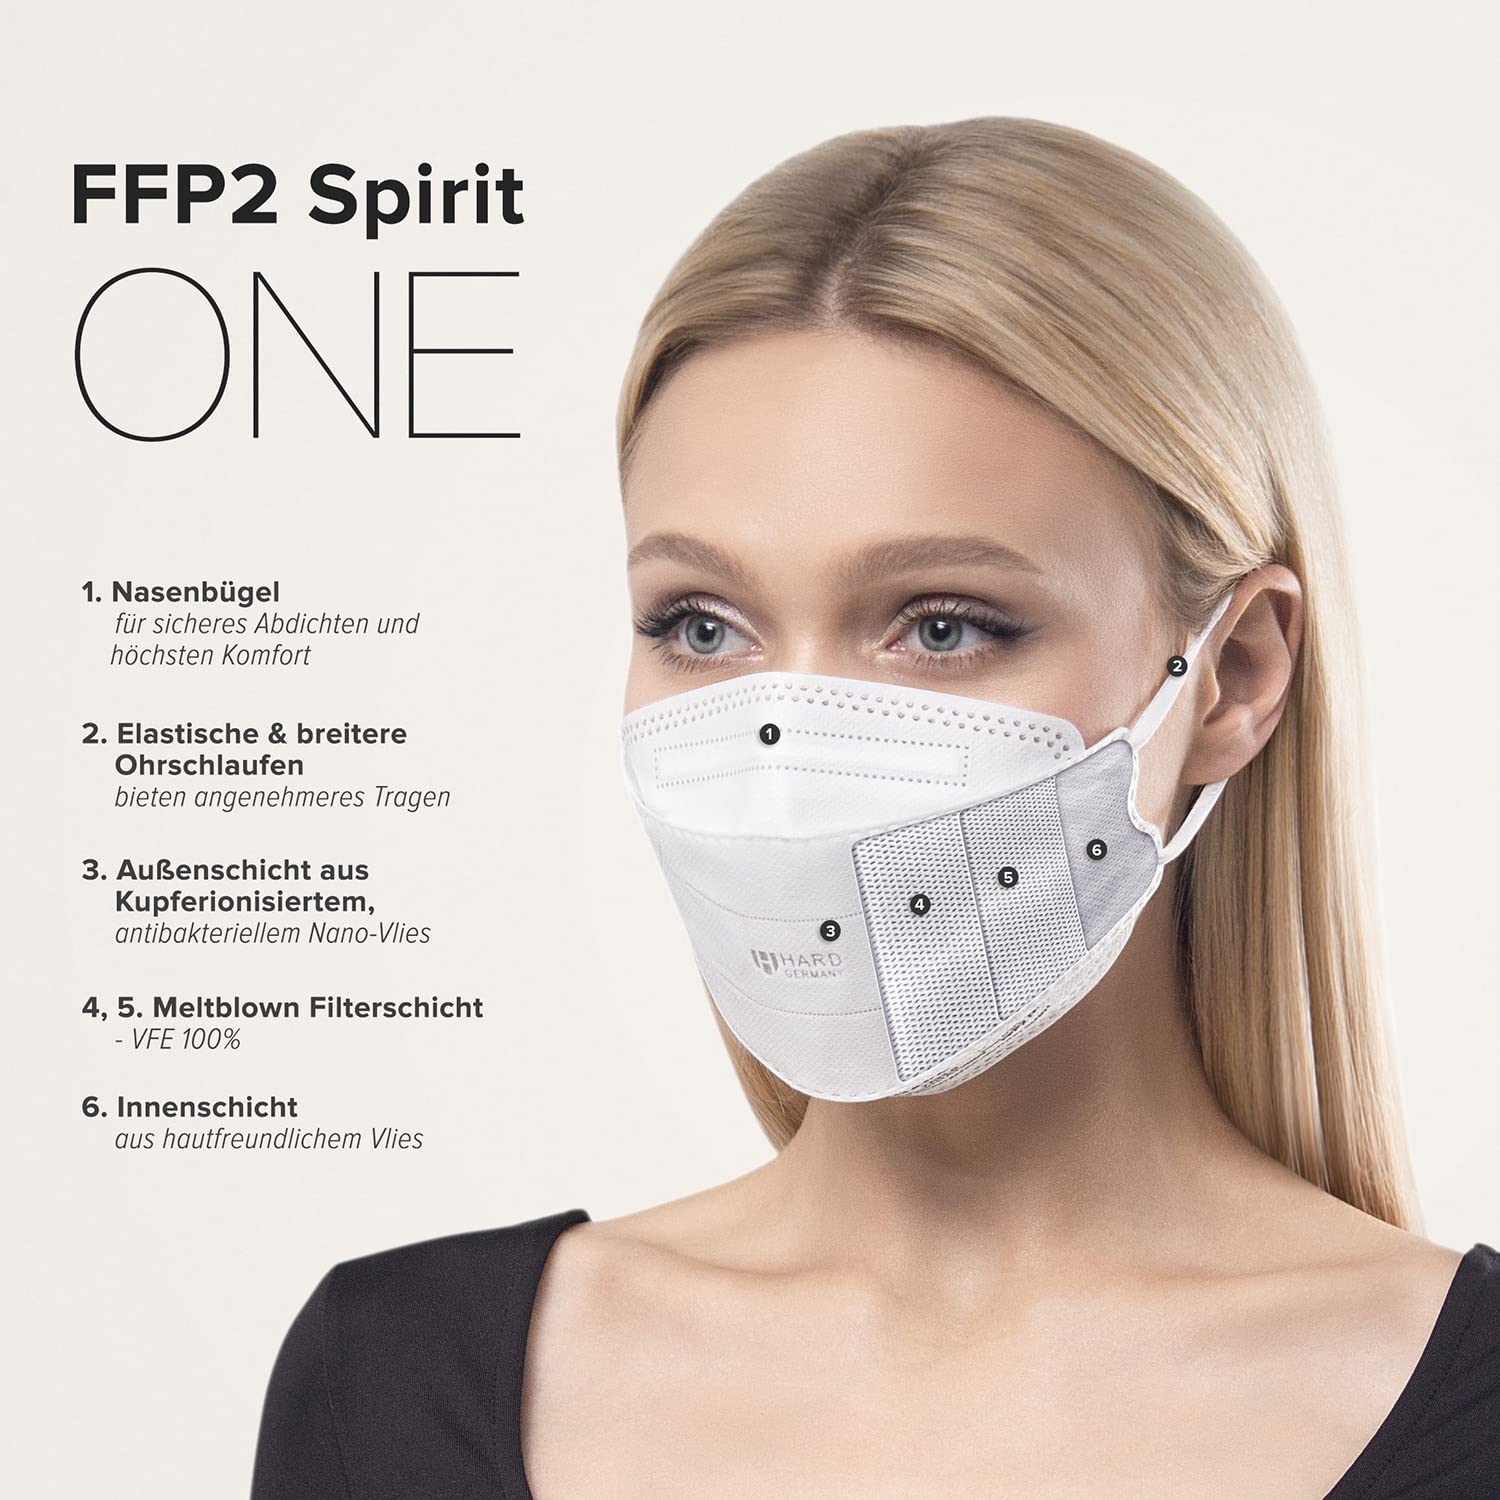 HARD 20 Stück FFP2 Atemschutzmaske, Made in Germany EN 149:2001+A:2009 zertifizierte Maske filtert 99,5%, Antibakterielle Kupfer Nano Technologie - Weiß Fischmaske - Medizinische Masken